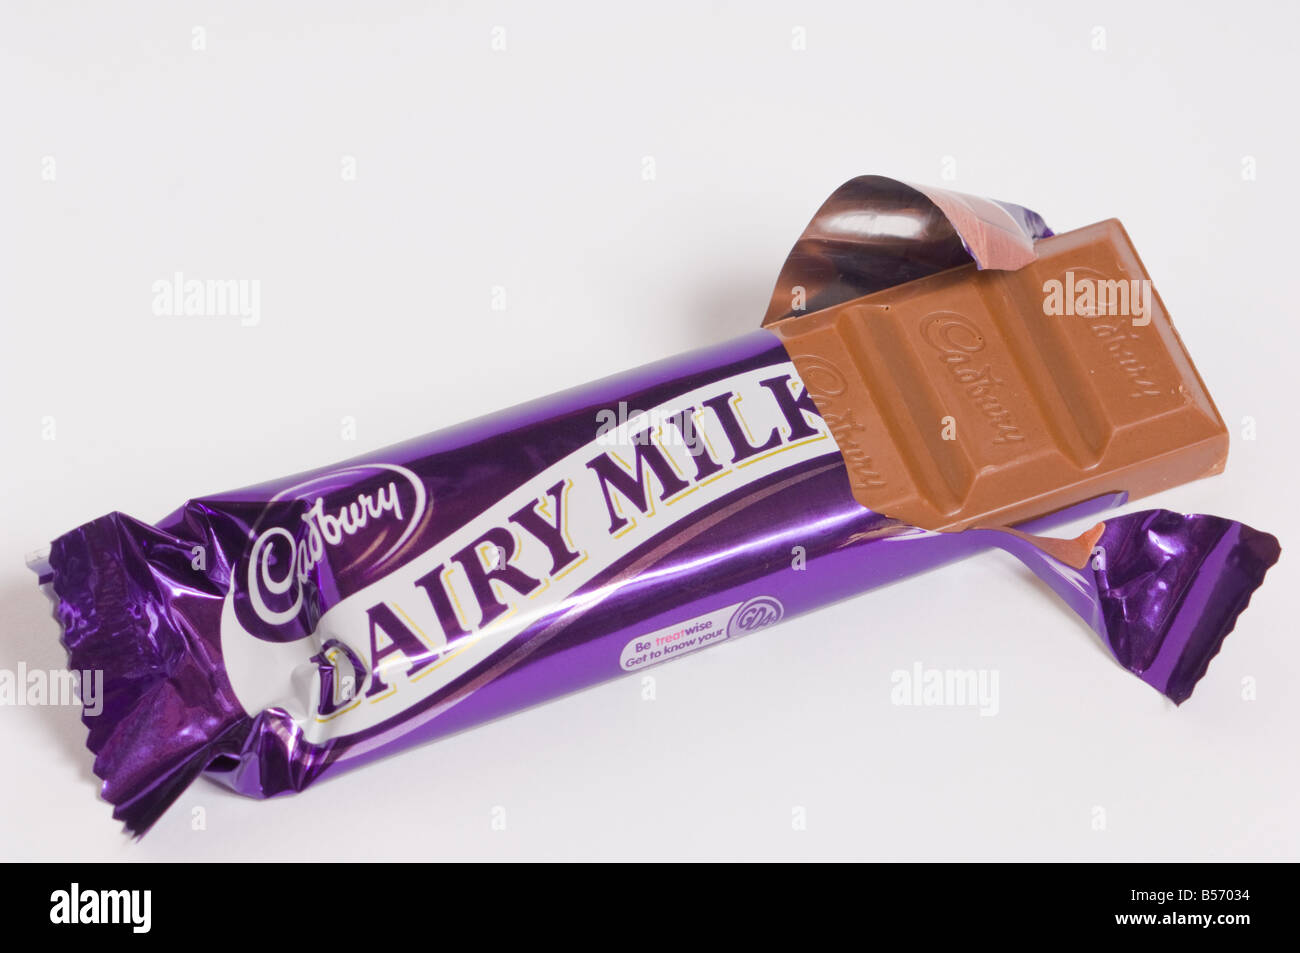 Cadburys Dairy Milk Chocolate bar (opened) on white background Stock Photo